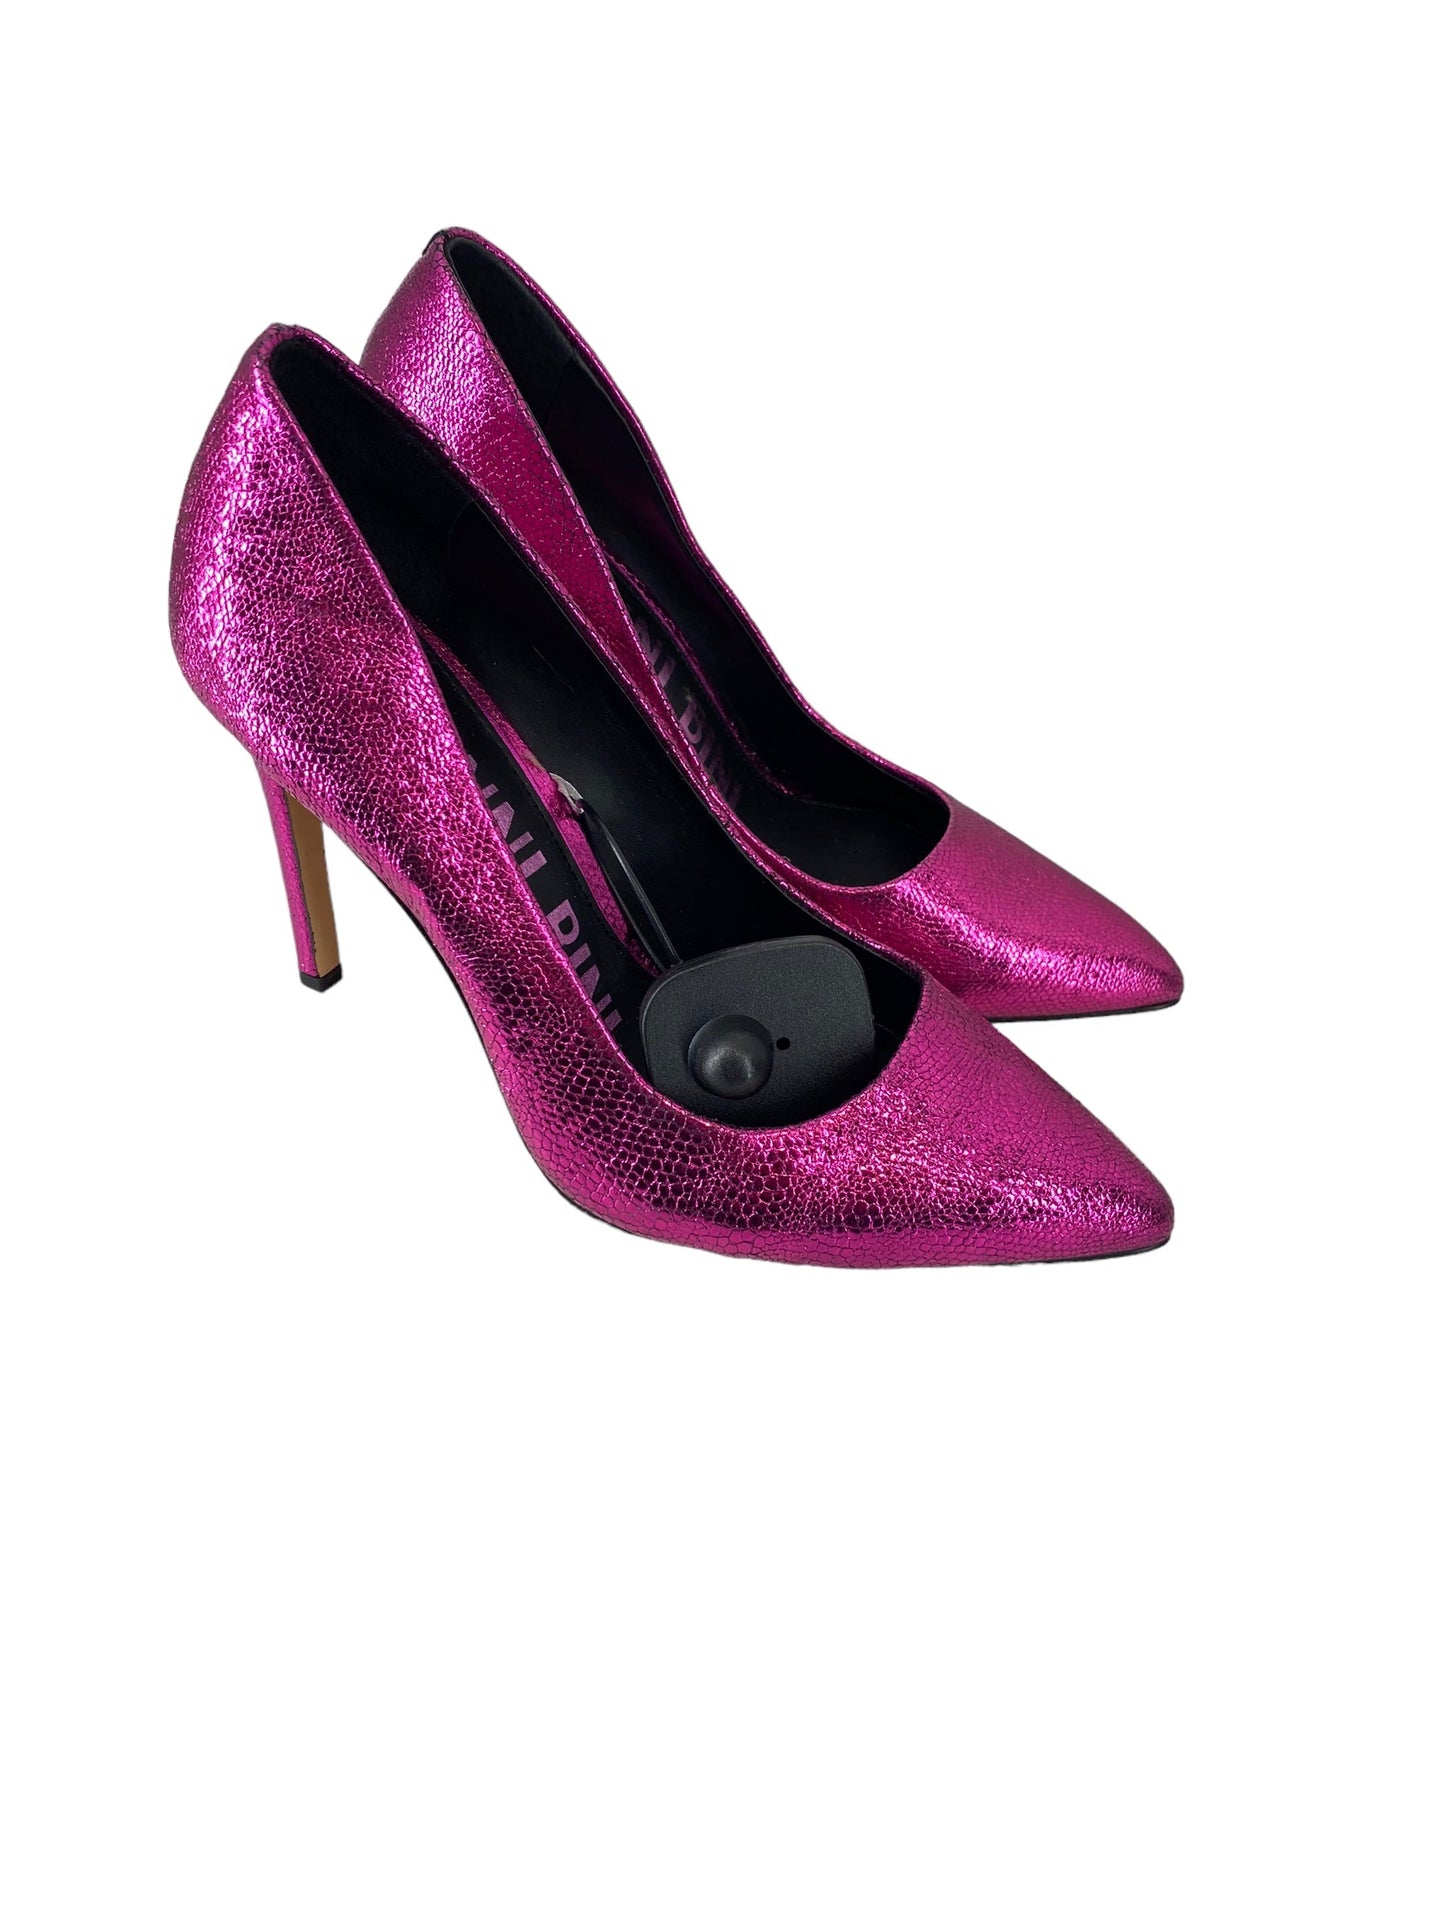 Shoes Heels Stiletto By Gianni Bini  Size: 6.5